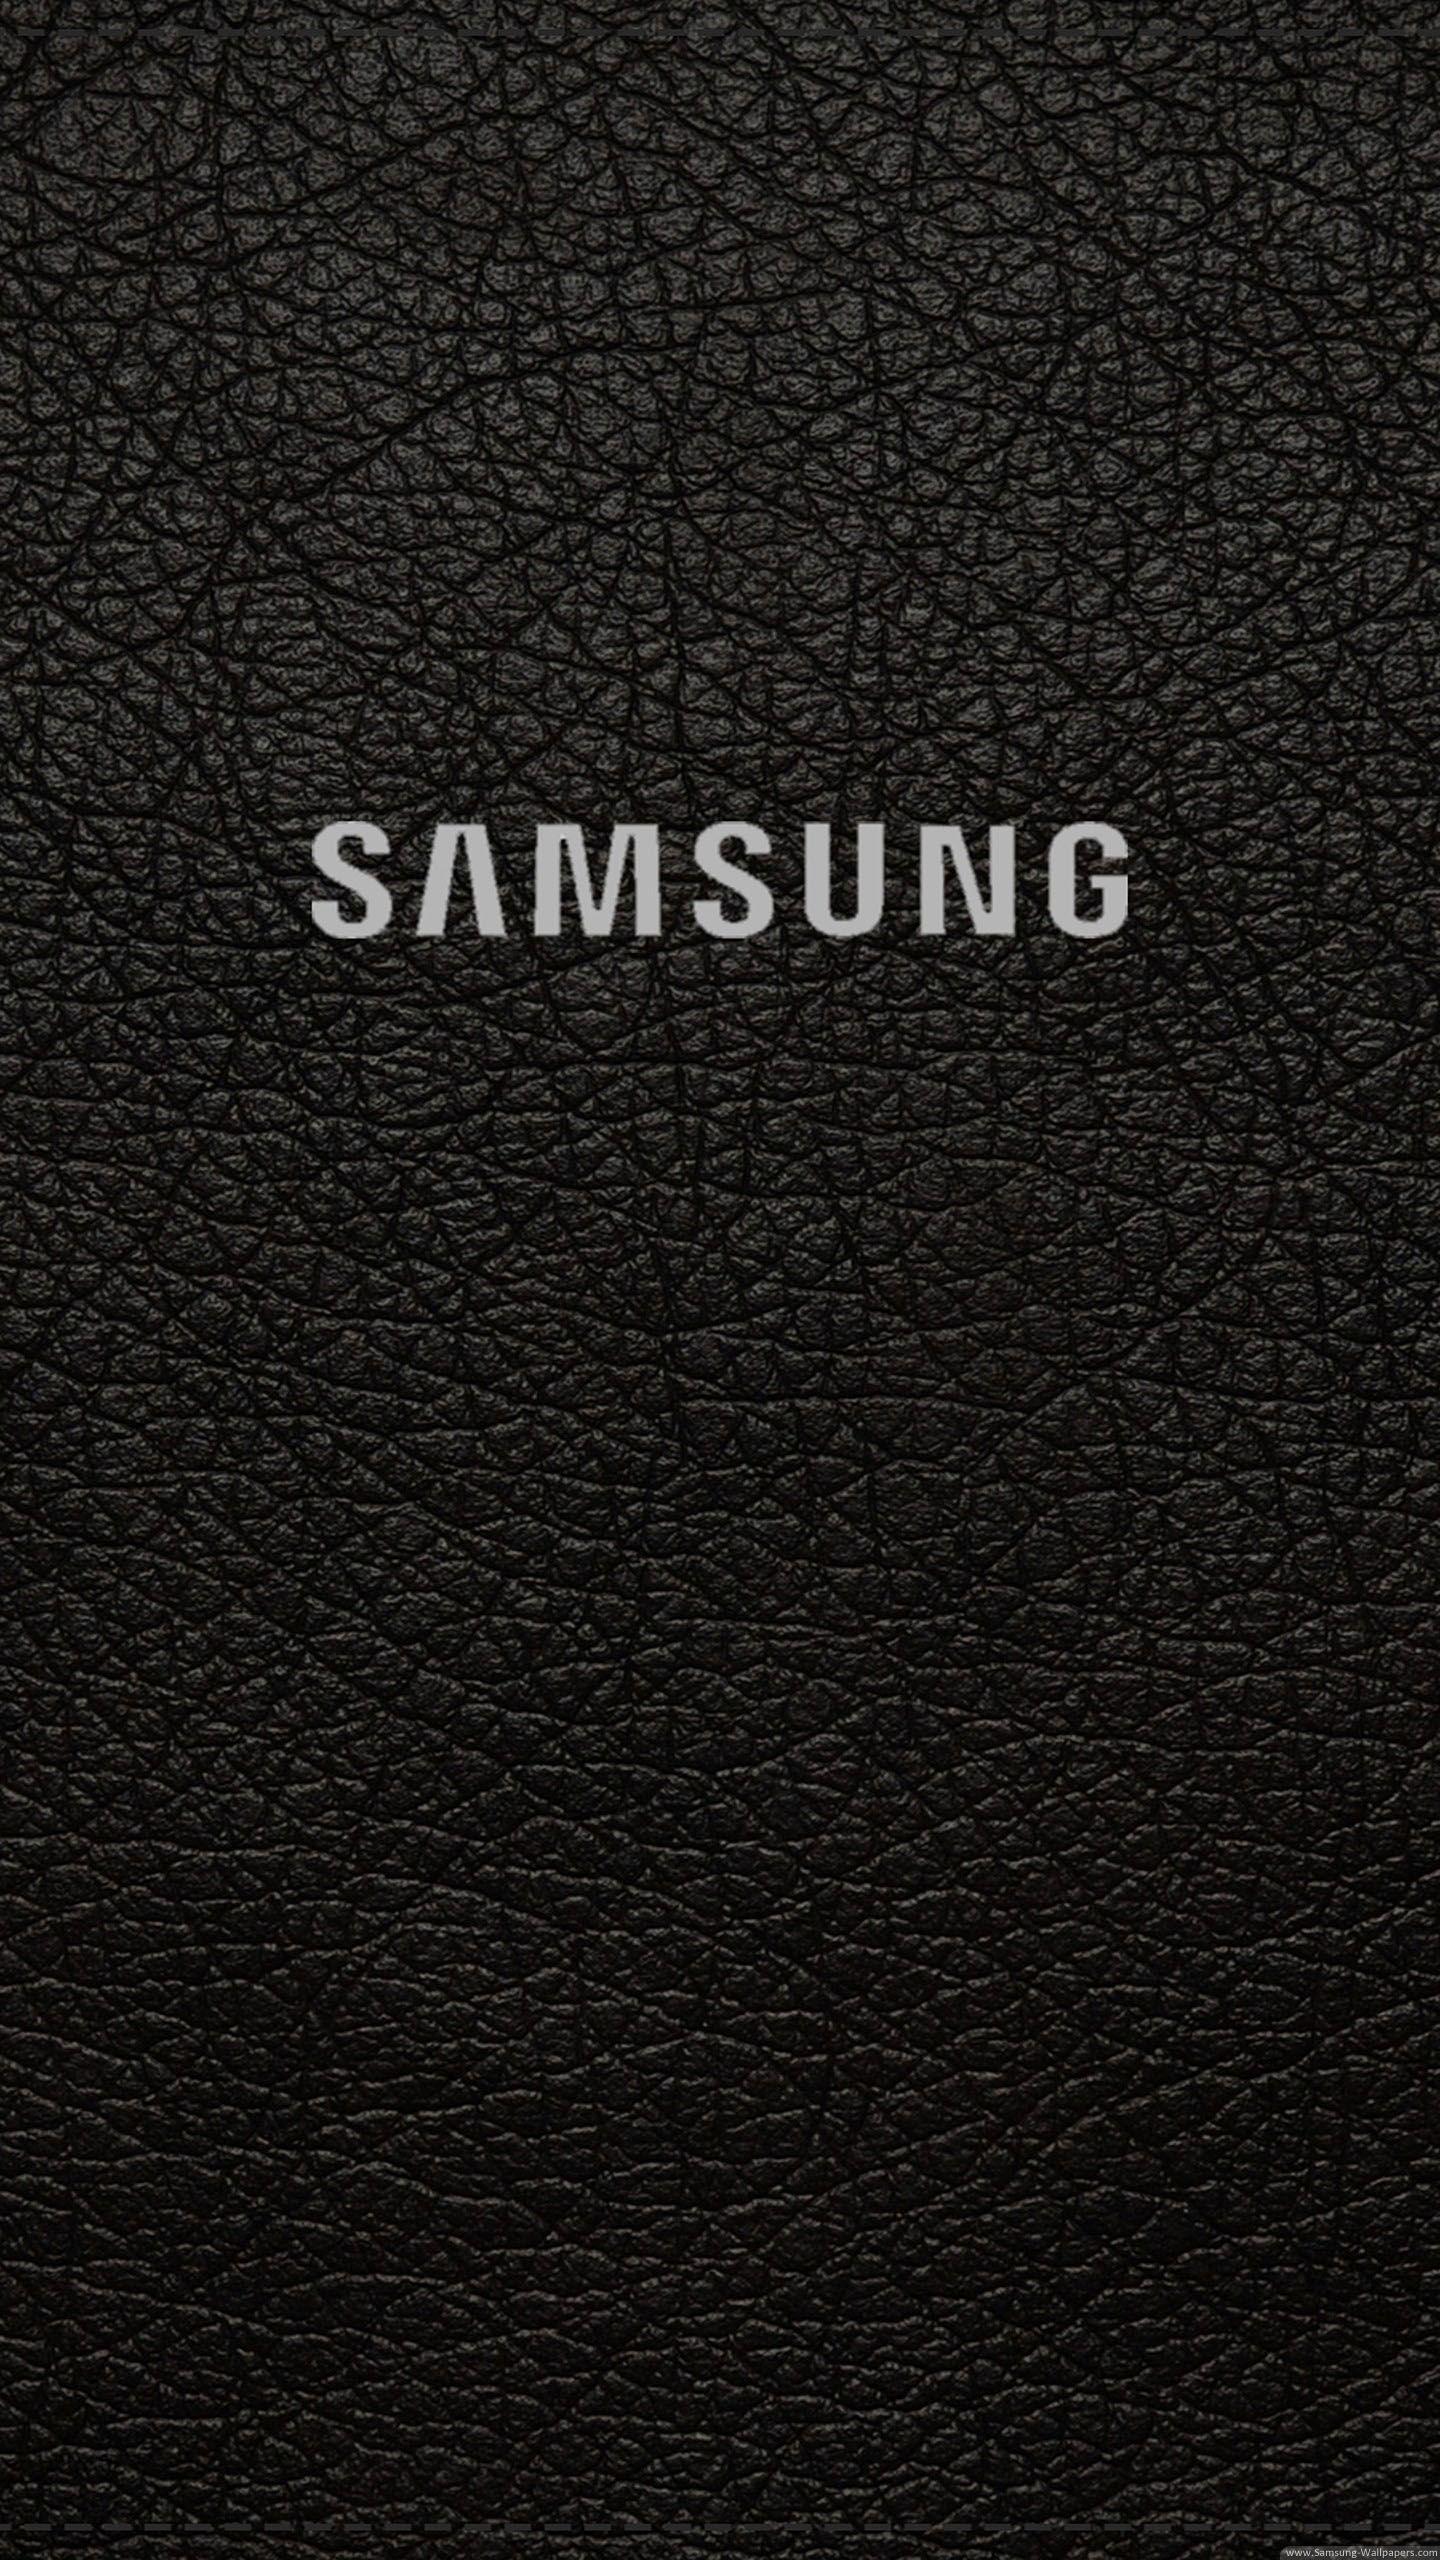 Samsung Mobile Black Hd Wallpapers - Wallpaper Cave